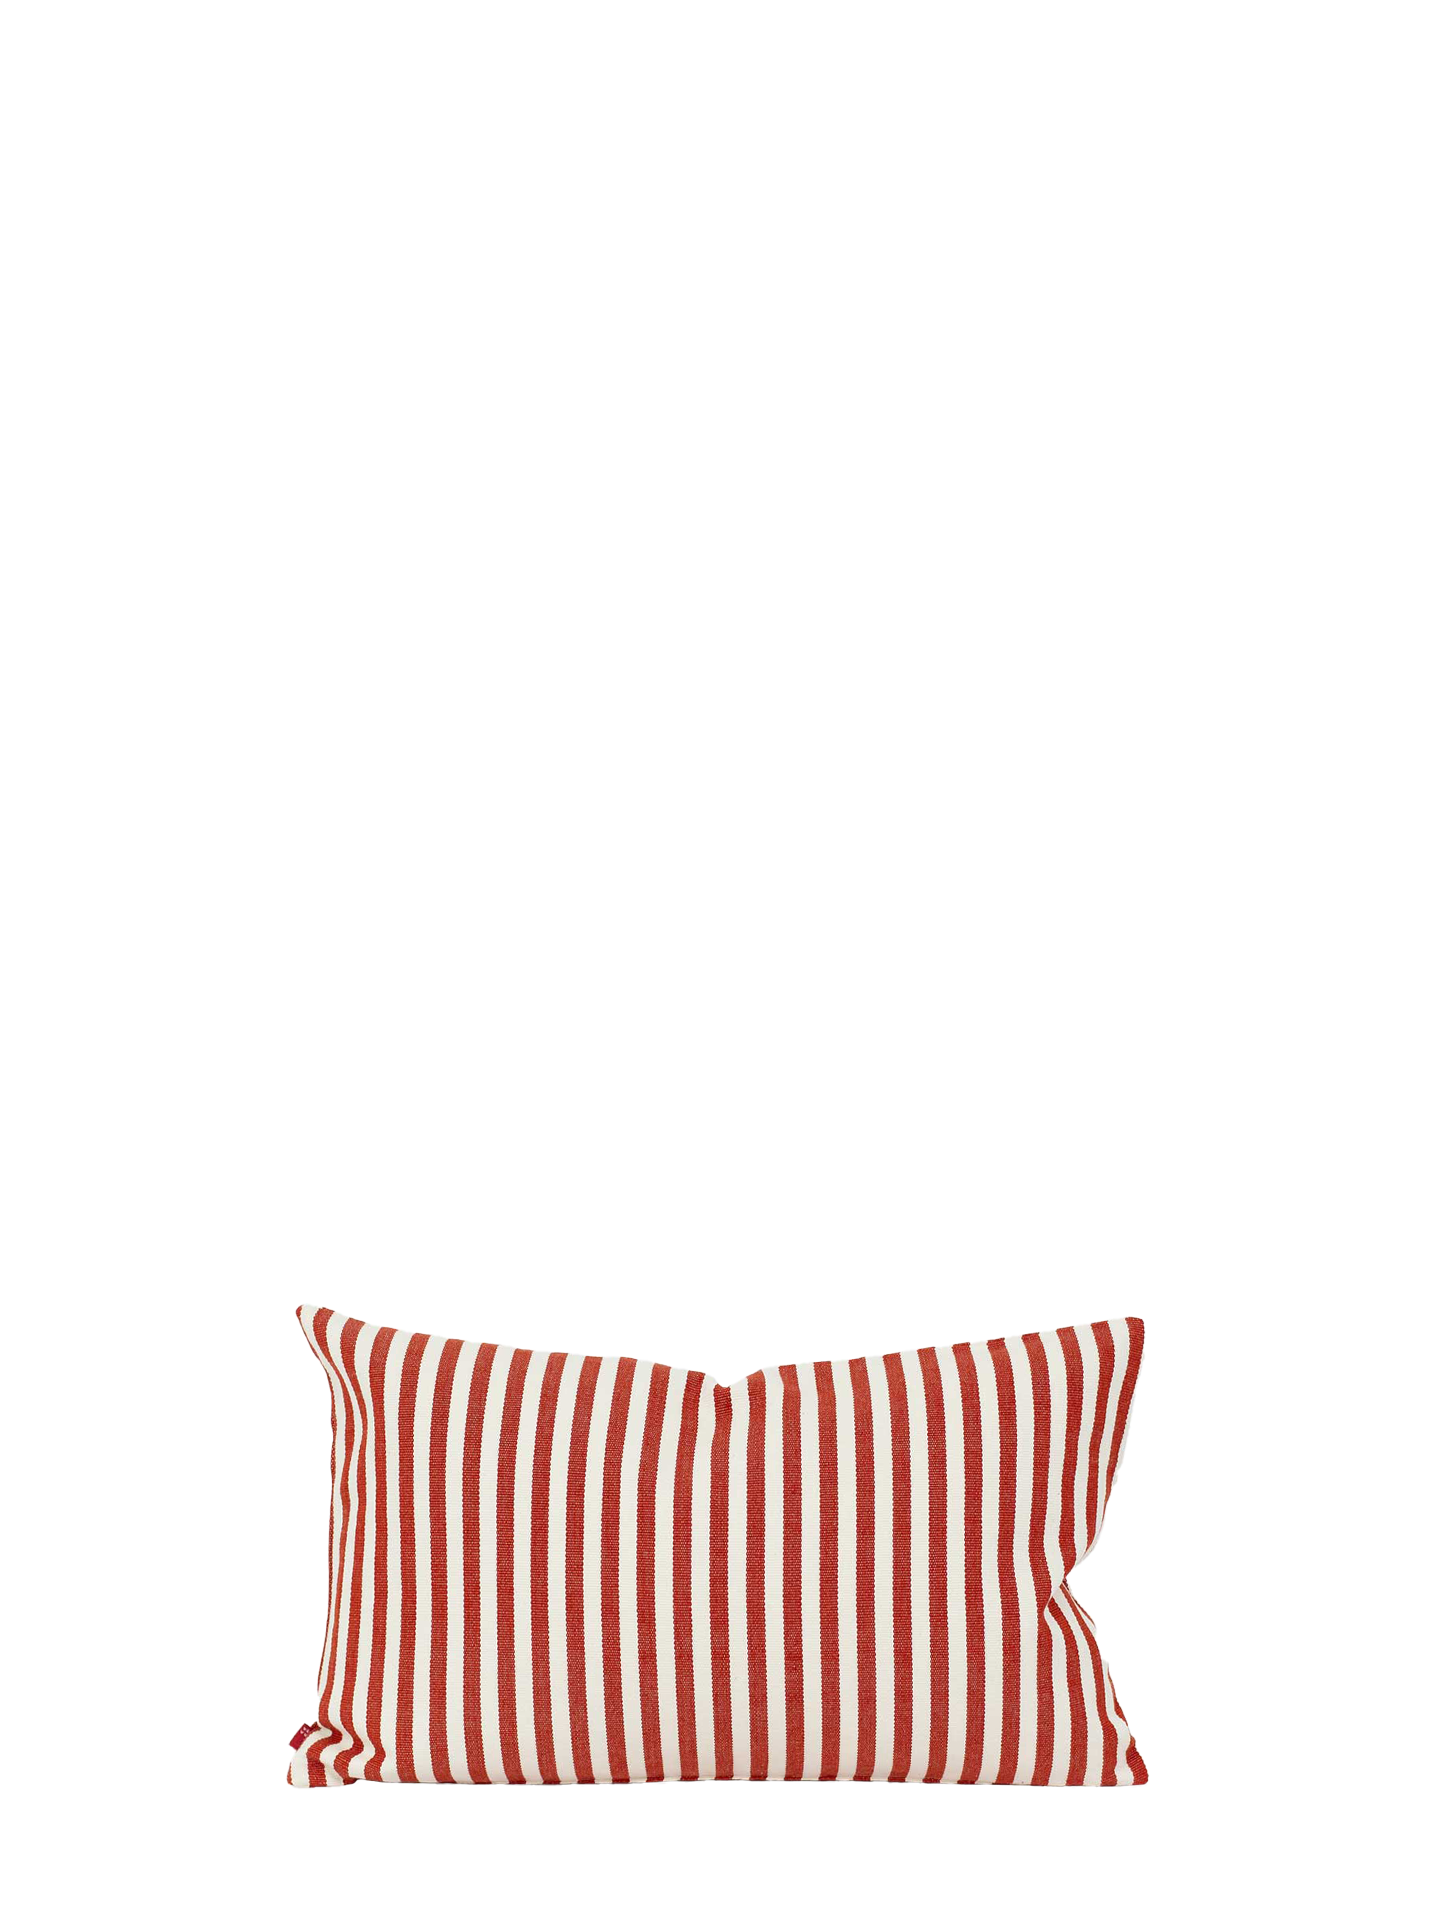 Josefina Small cushion cover (30x50cm), white/red